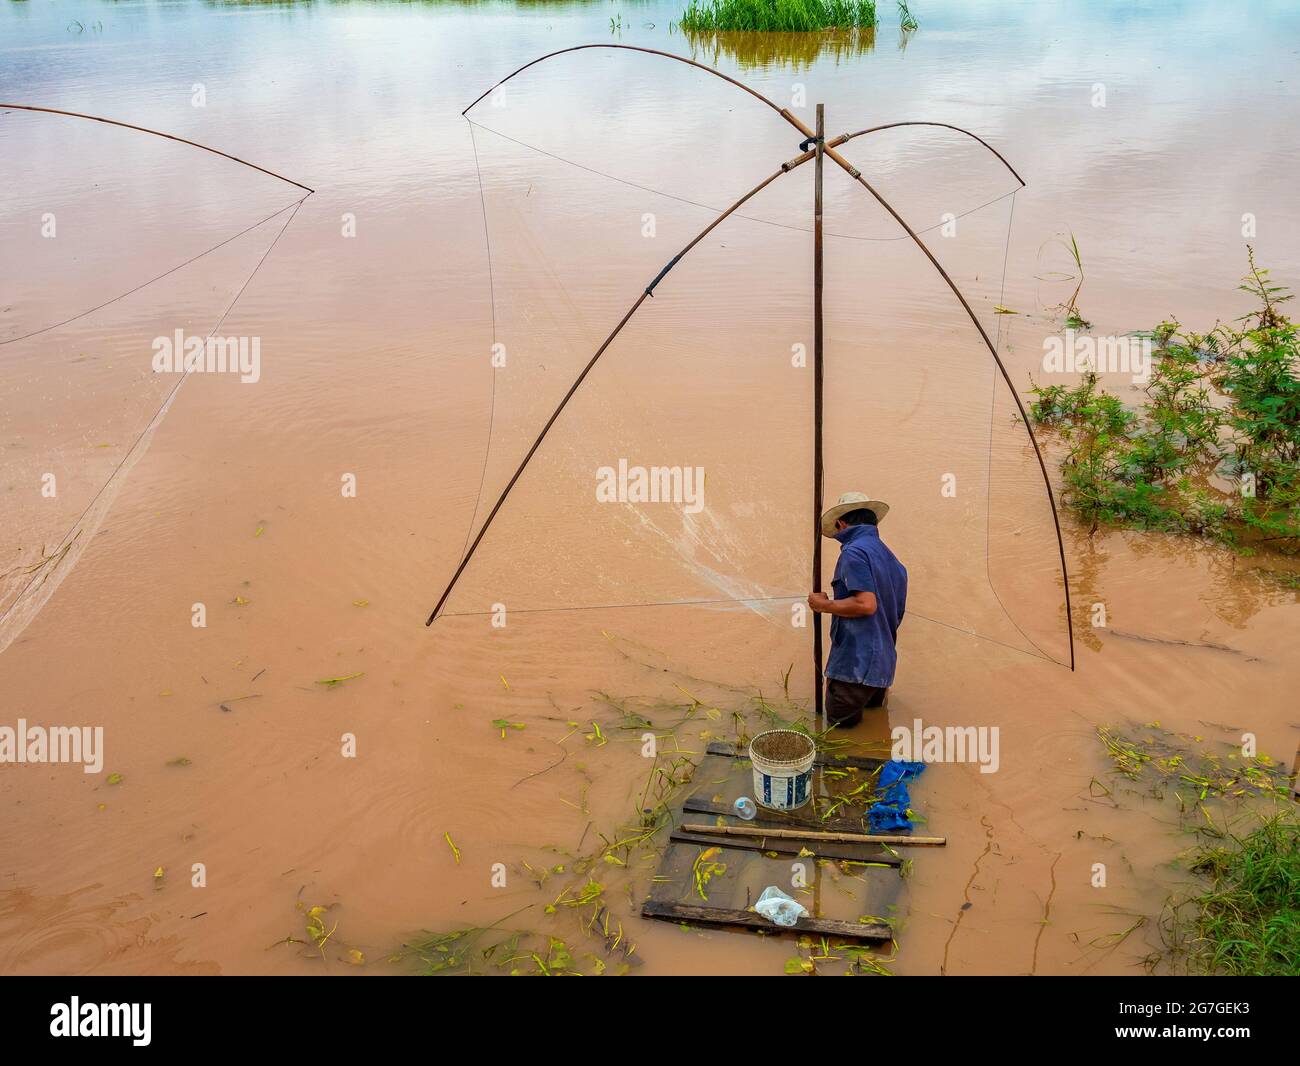 https://c8.alamy.com/comp/2G7GEK3/fisherman-in-the-mekong-with-ancient-fishing-tools-2G7GEK3.jpg